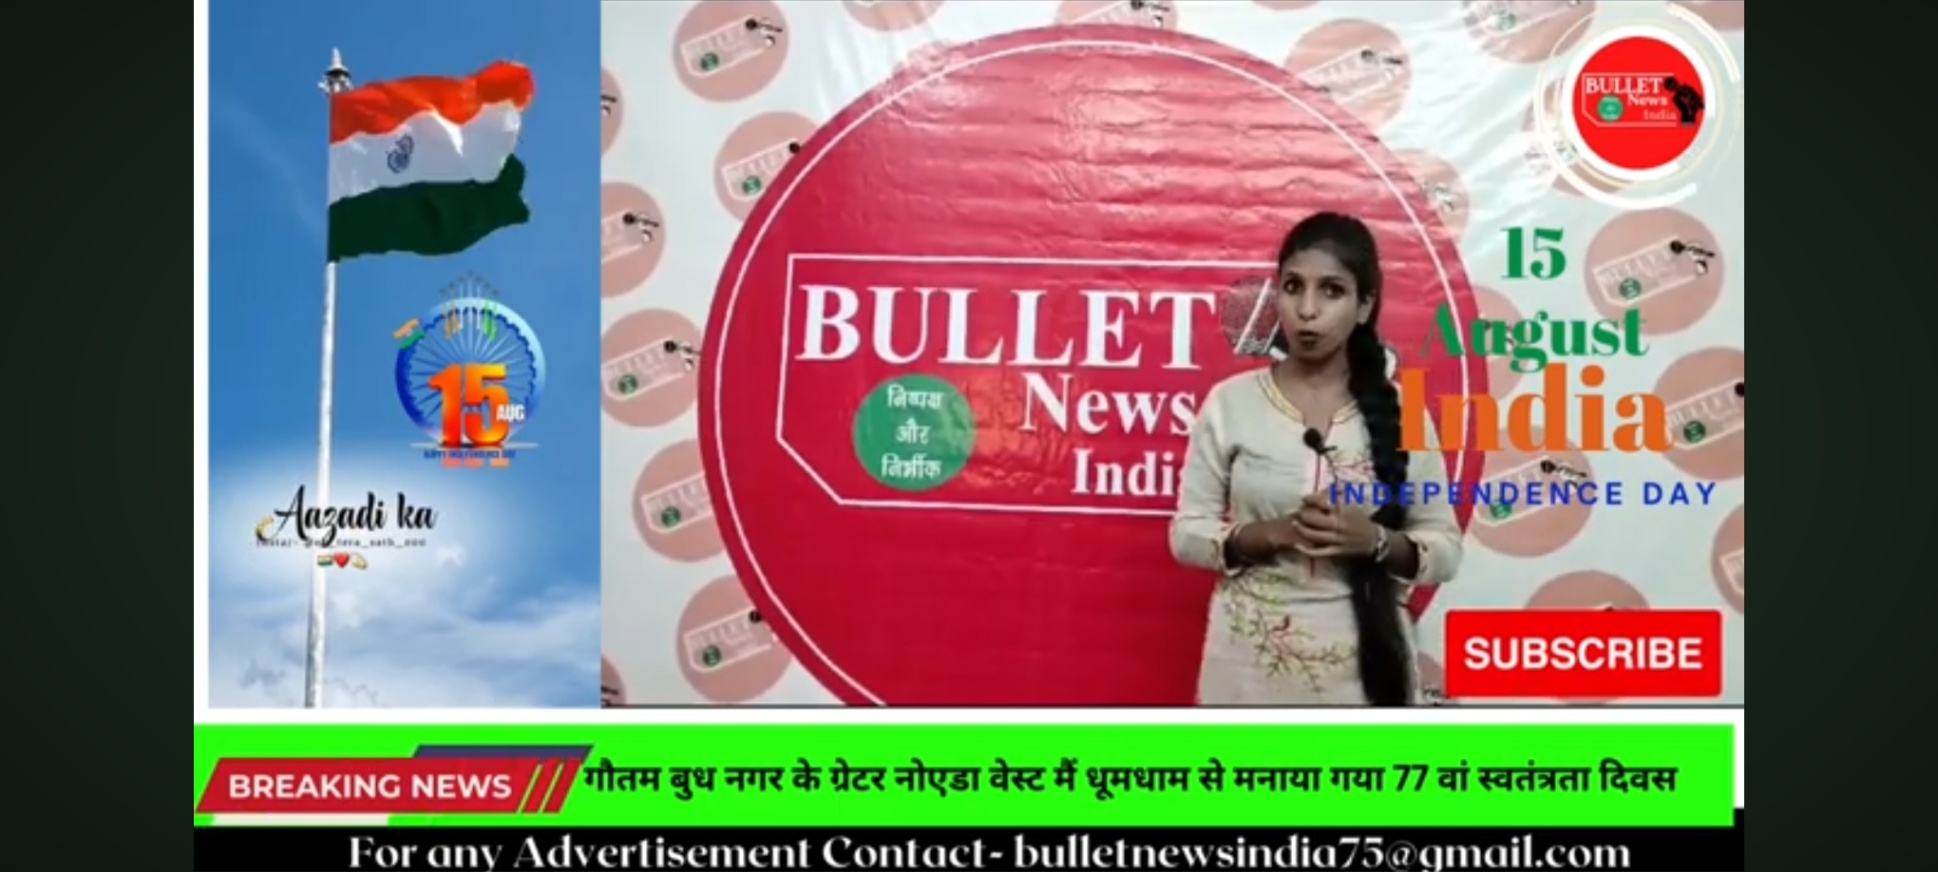 Bullet news India 